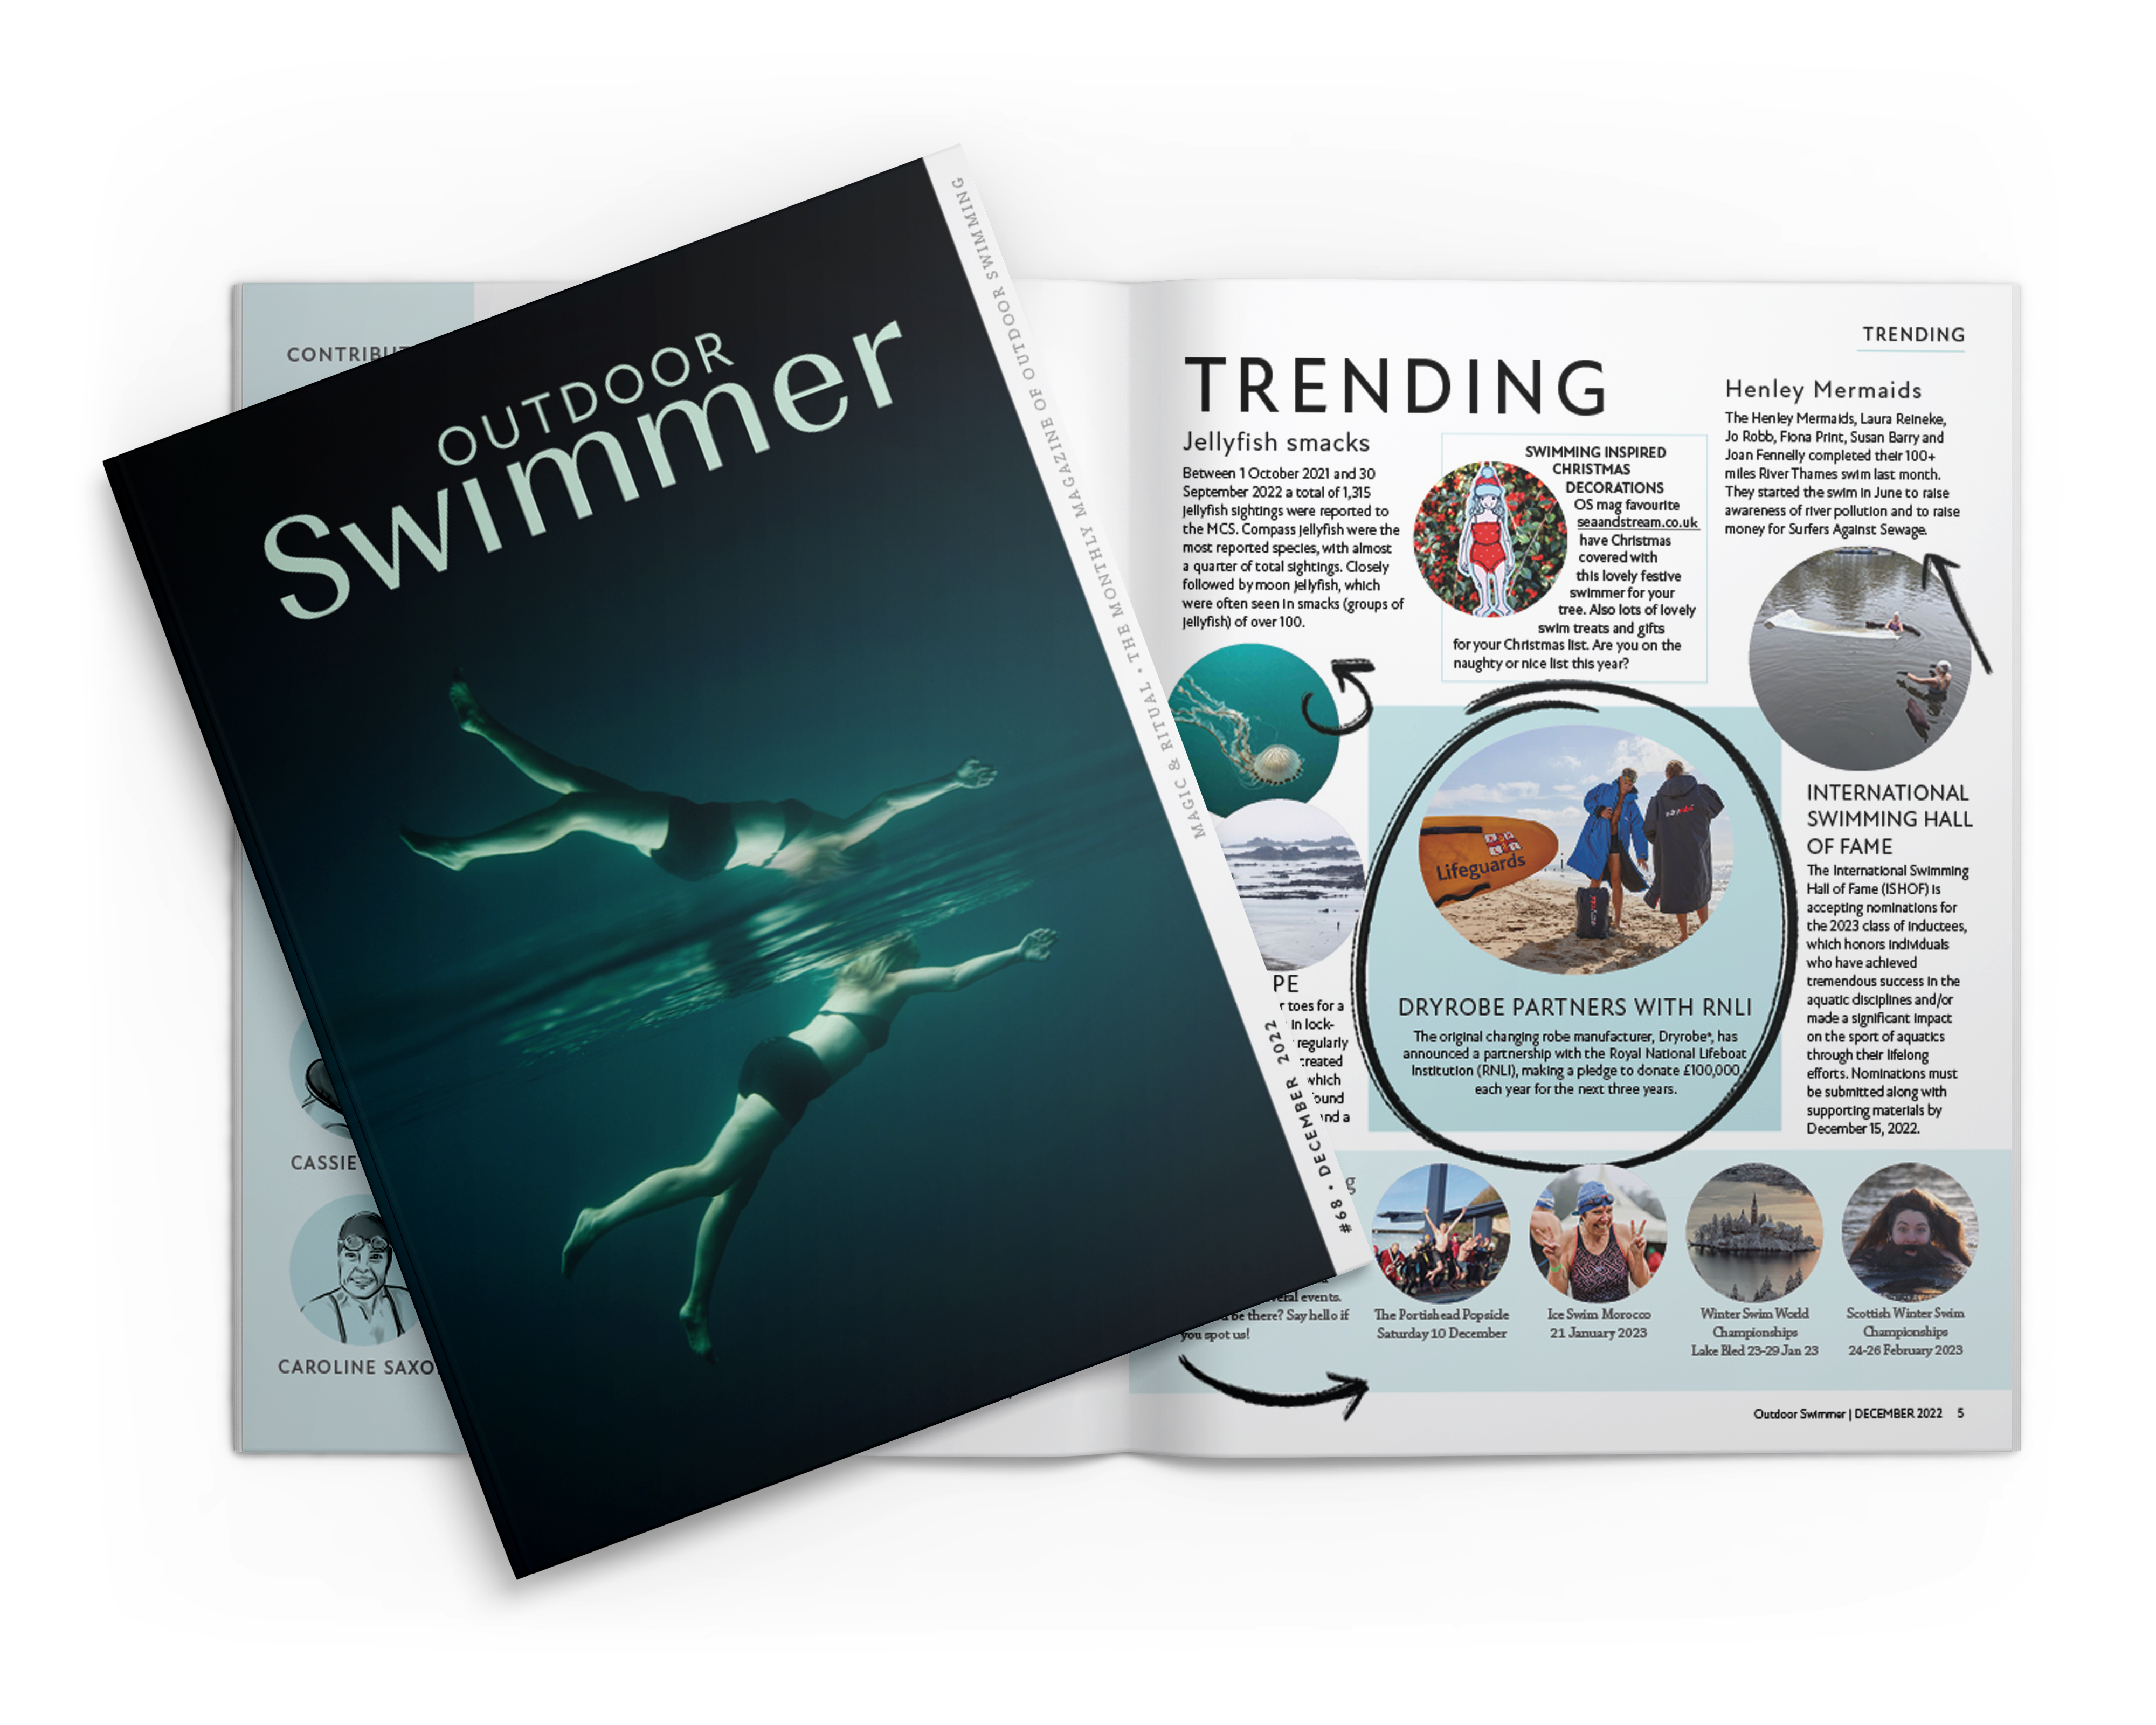 Outdoor Swimmer Magazine - MAGIC & RITUAL